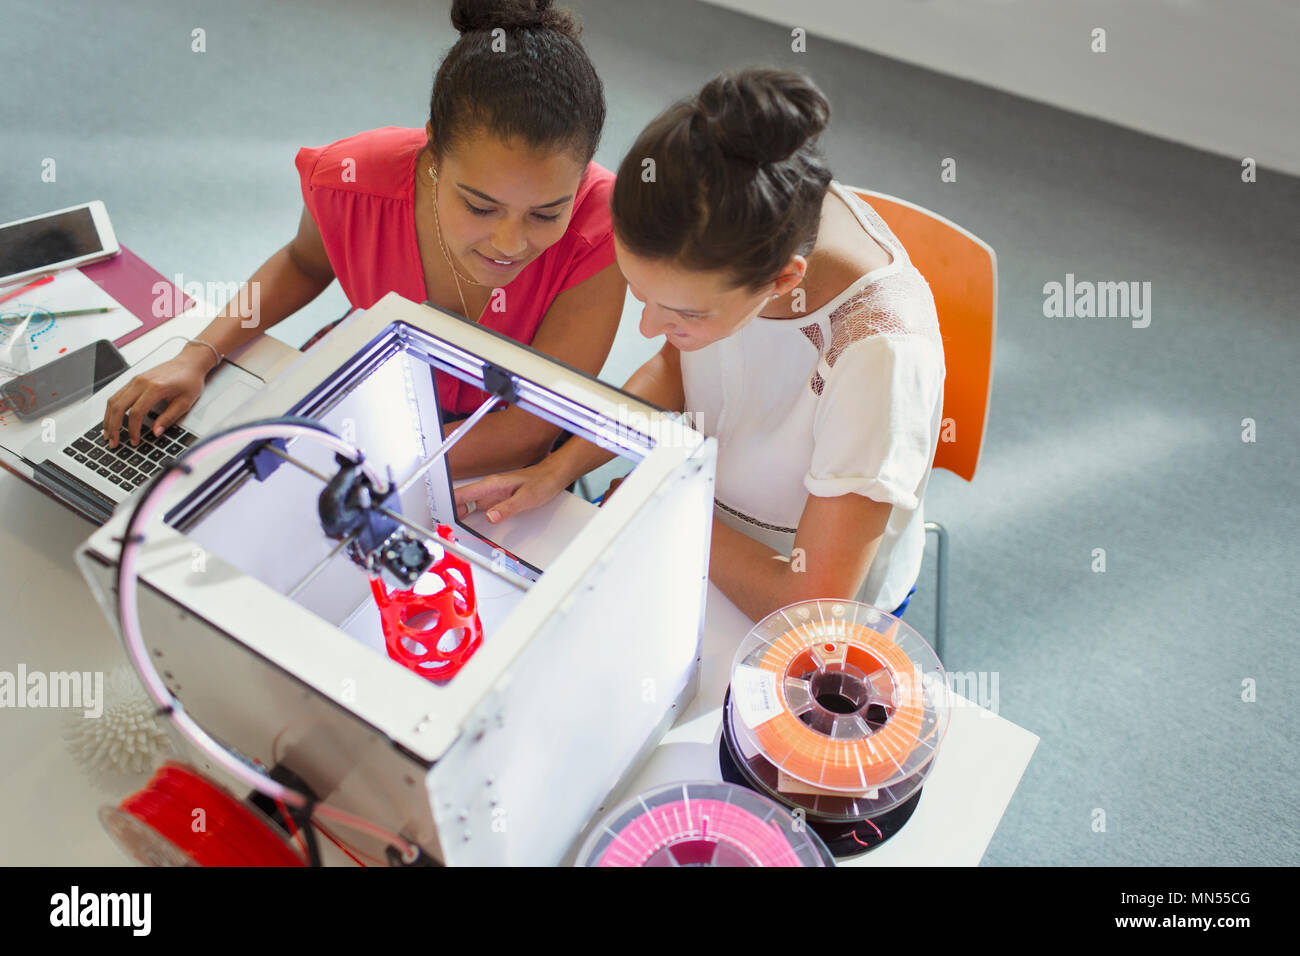 Female designers using 3D printer Stock Photo